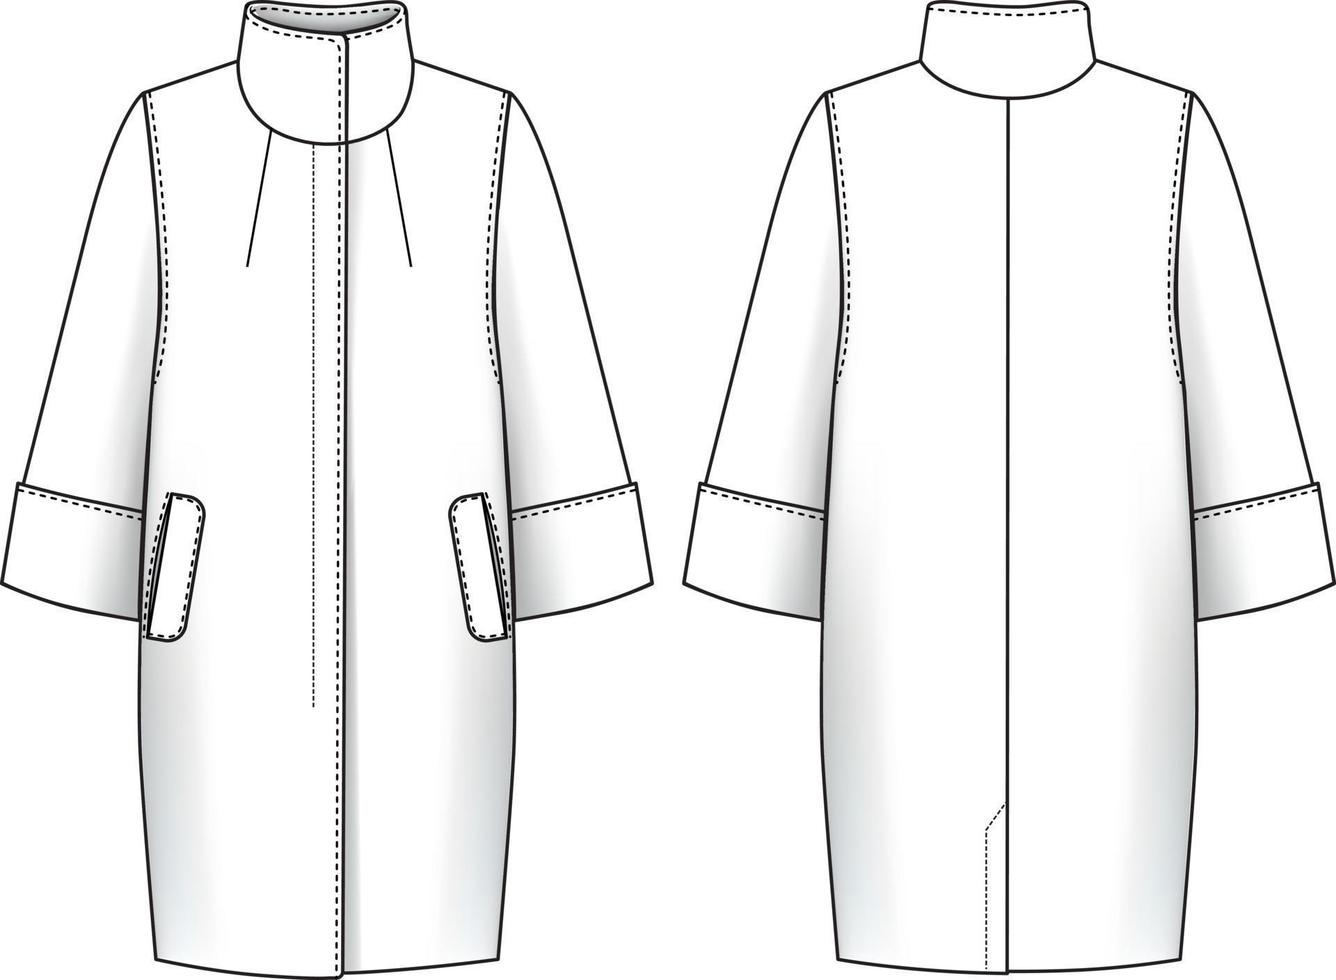 Wool Coat technical illustration. Outwear flat fashion sketch vector